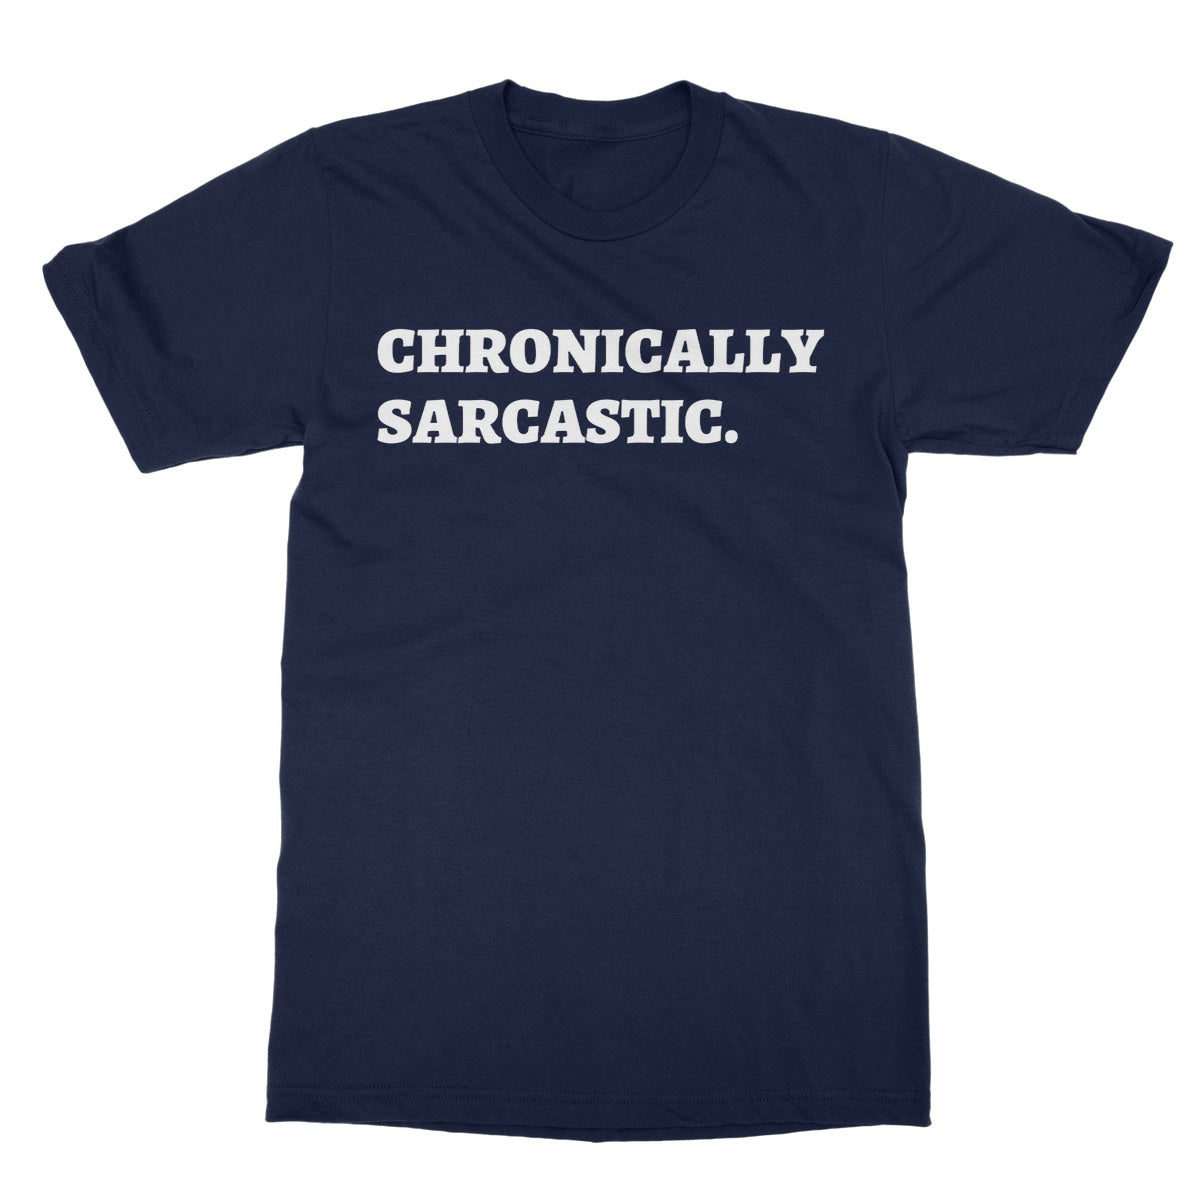 chronically sarcastic t shirt navy